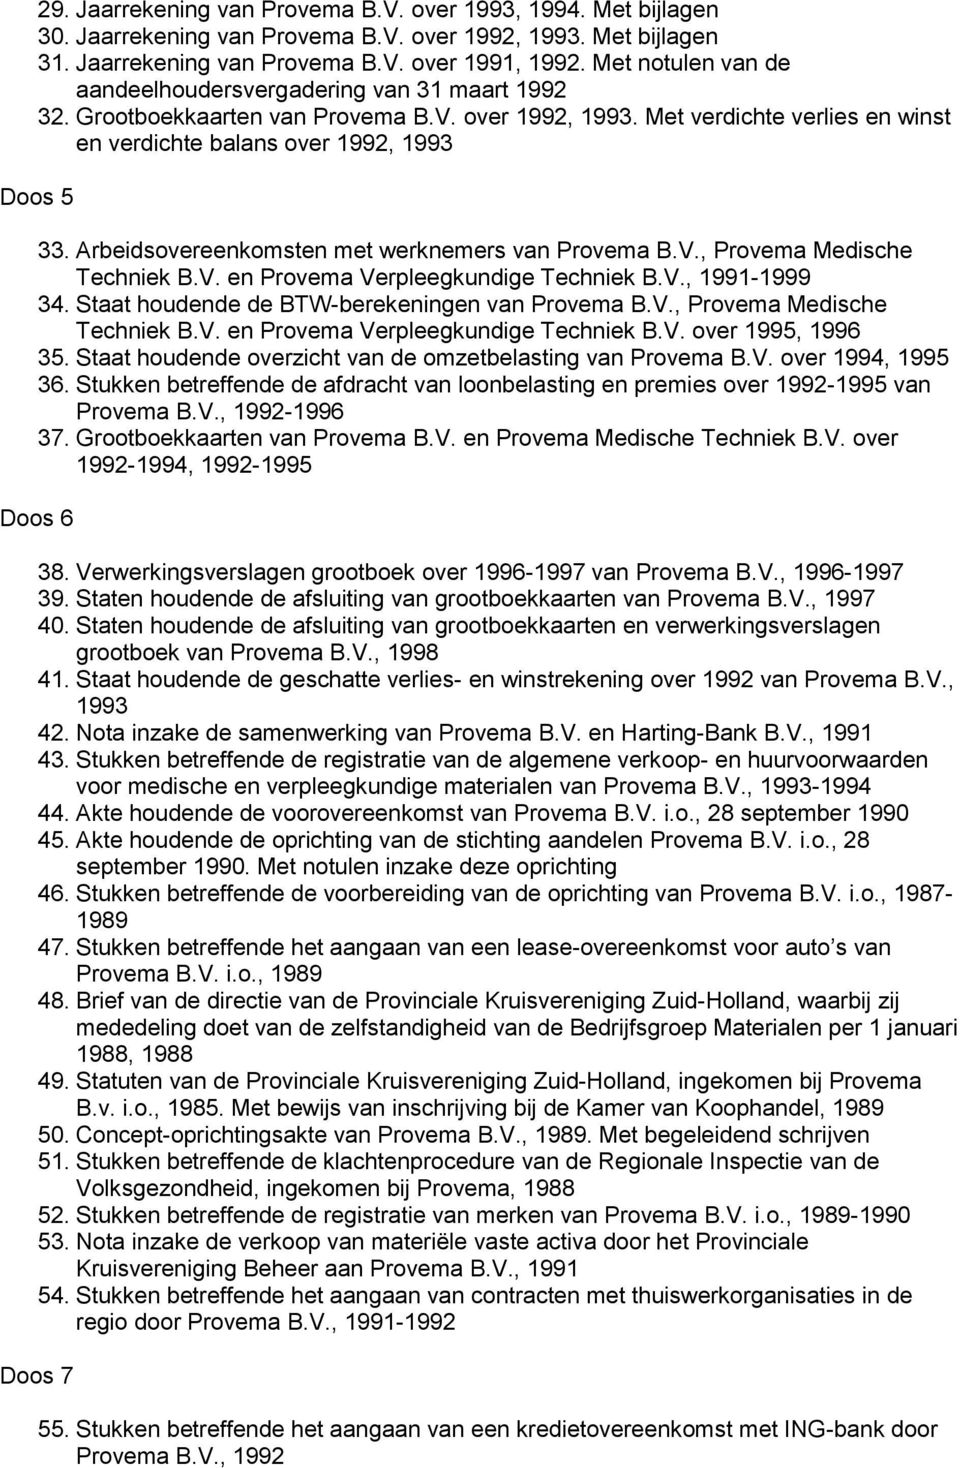 Arbeidsovereenkomsten met werknemers van Provema B.V., Provema Medische Techniek B.V. en Provema Verpleegkundige Techniek B.V., 1991-1999 34. Staat houdende de BTW-berekeningen van Provema B.V., Provema Medische Techniek B.V. en Provema Verpleegkundige Techniek B.V. over 1995, 1996 35.